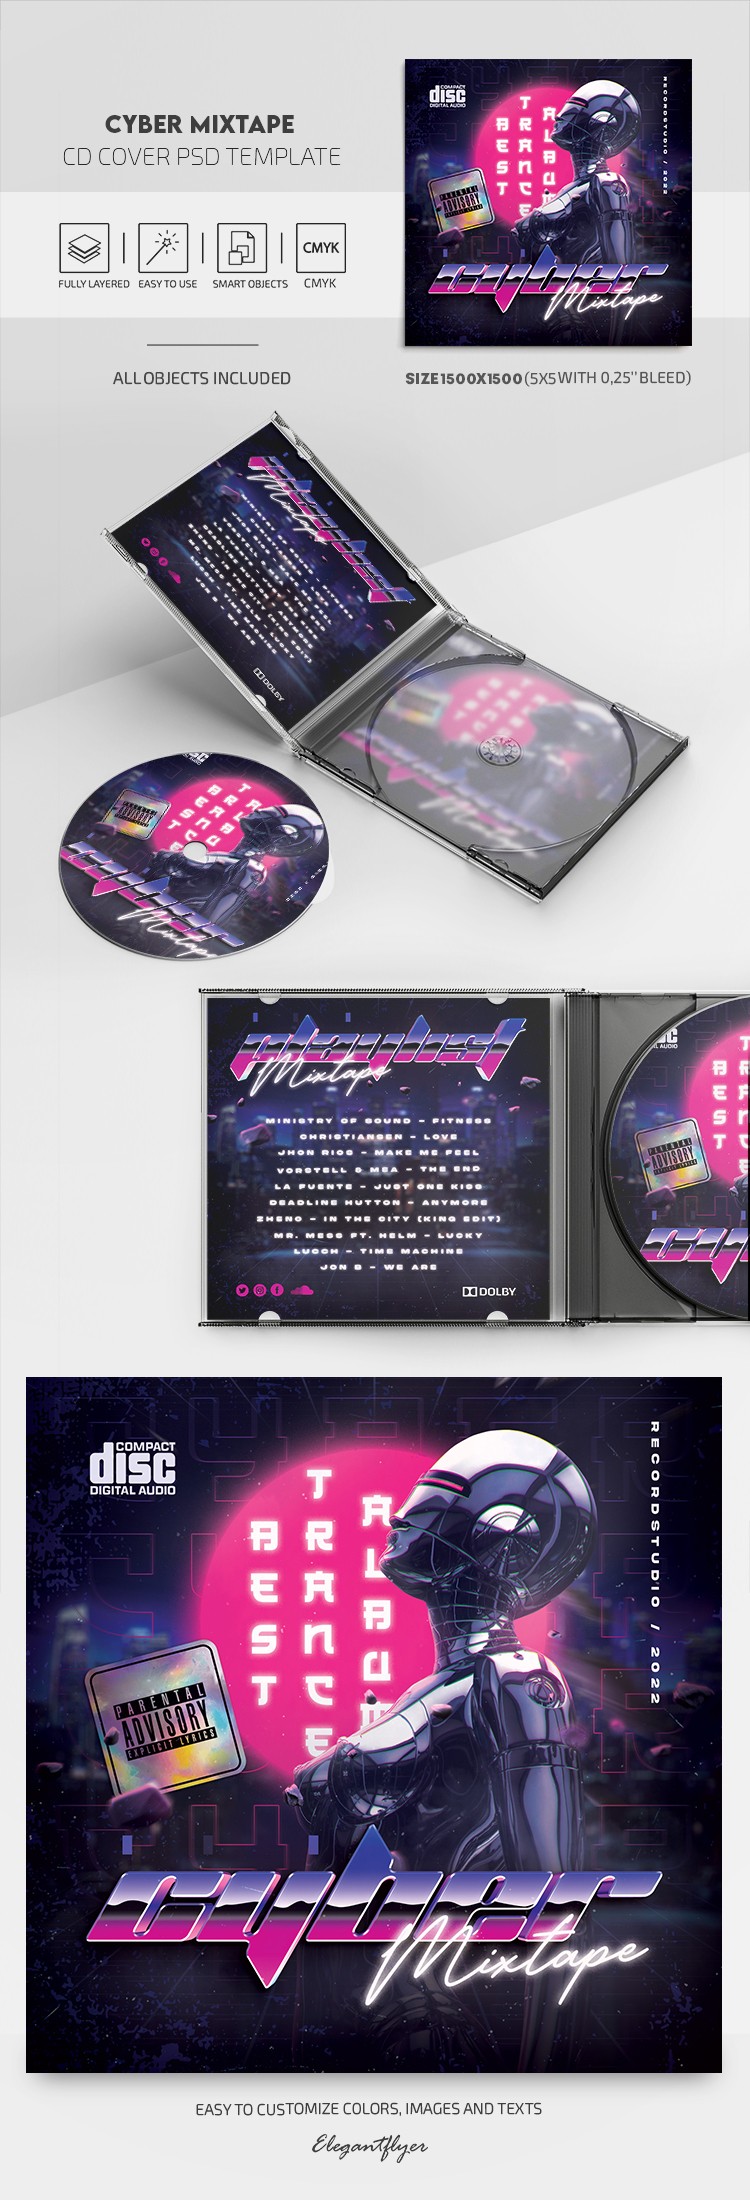 Cyber Mixtape CD Cover by ElegantFlyer